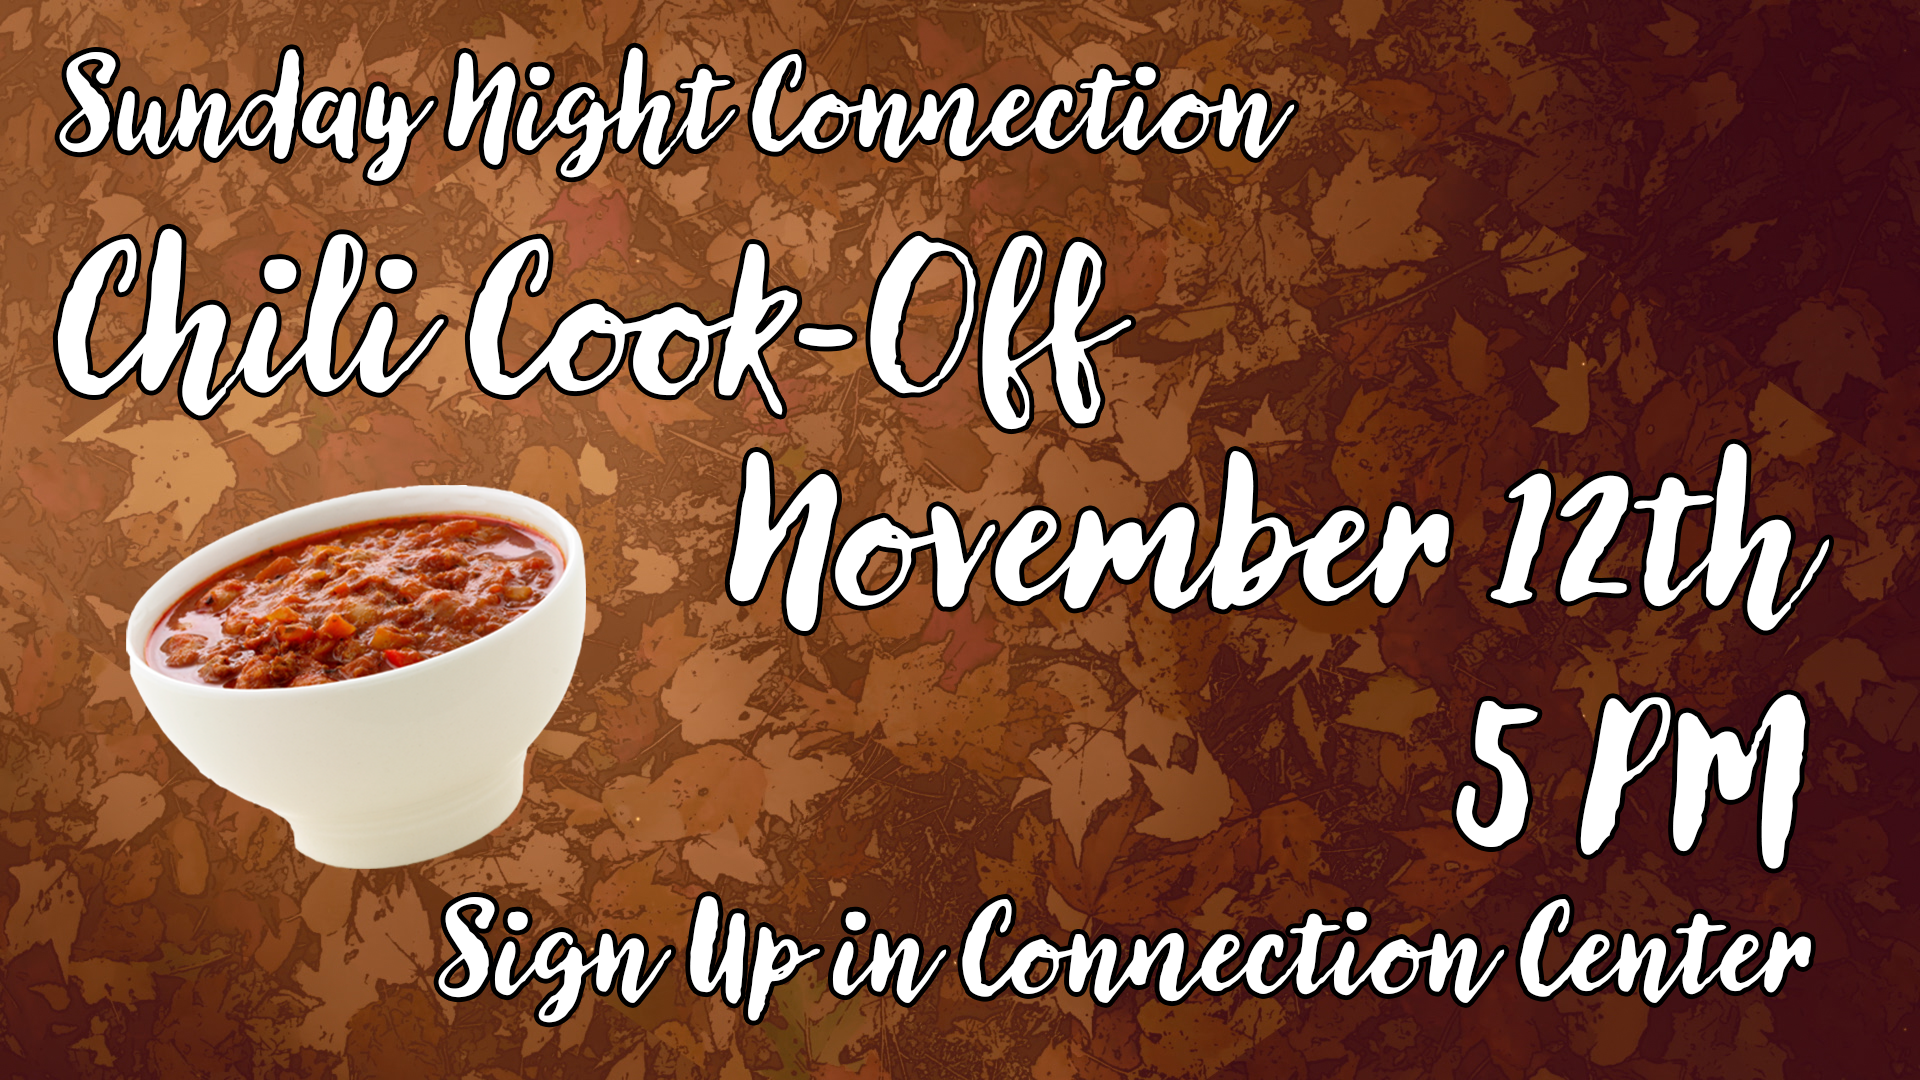 Saturday Night Connection Chili Cook Off at November 12th at 5 PM - Fee Fee Baptist Church